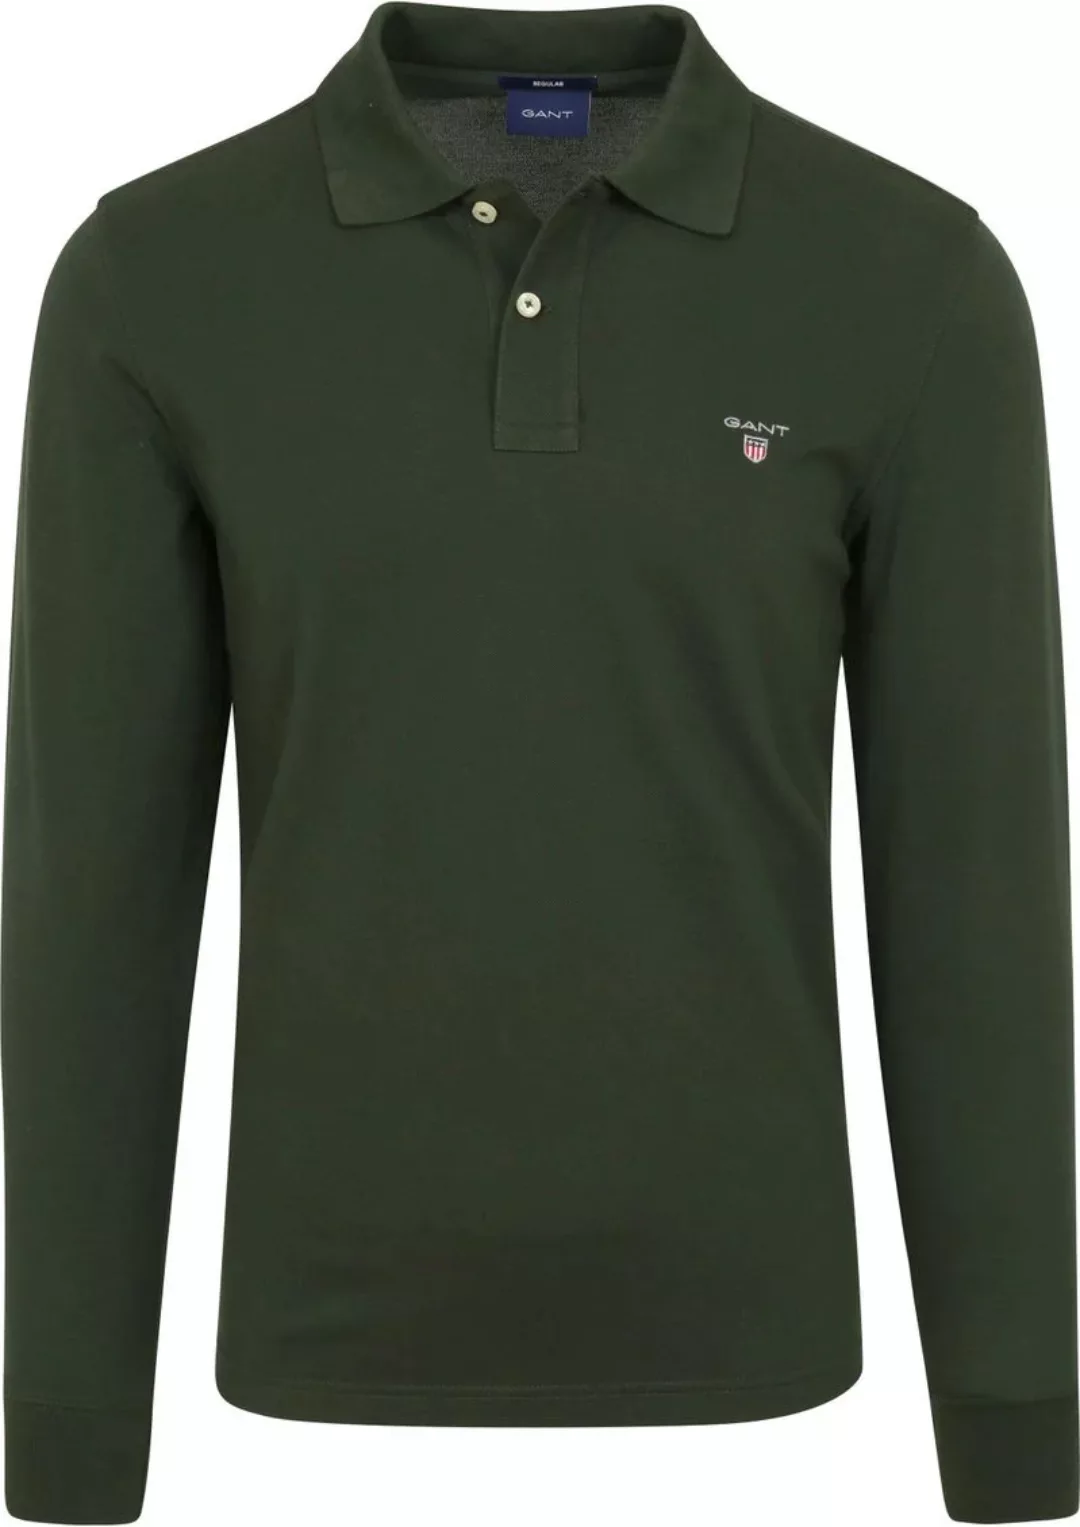 Gant Polohemd Rugger Dunkelgrün - Größe 3XL günstig online kaufen